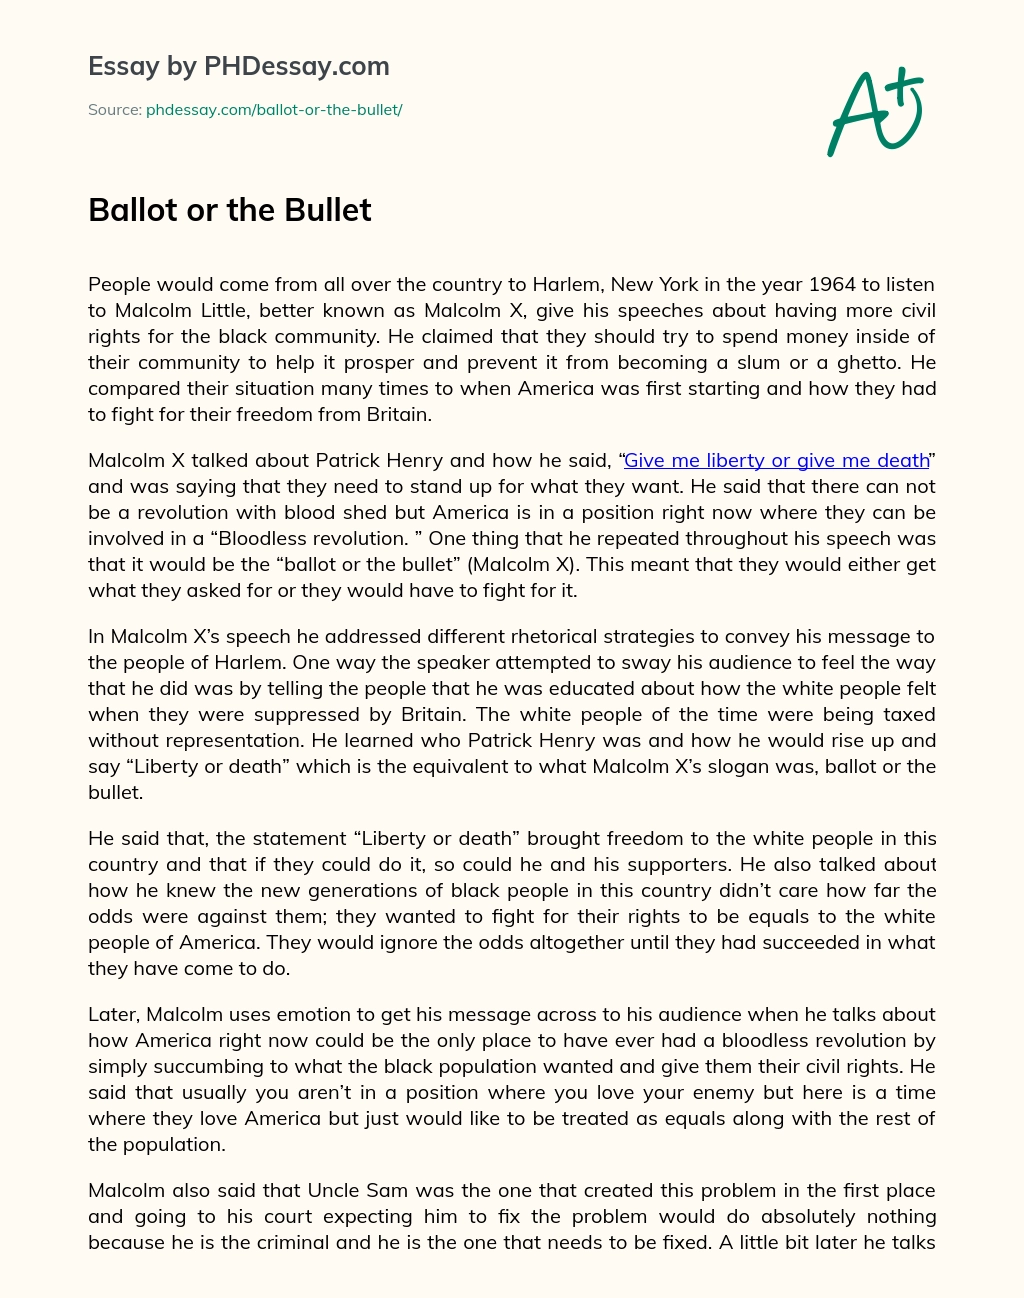 Ballot or the Bullet essay